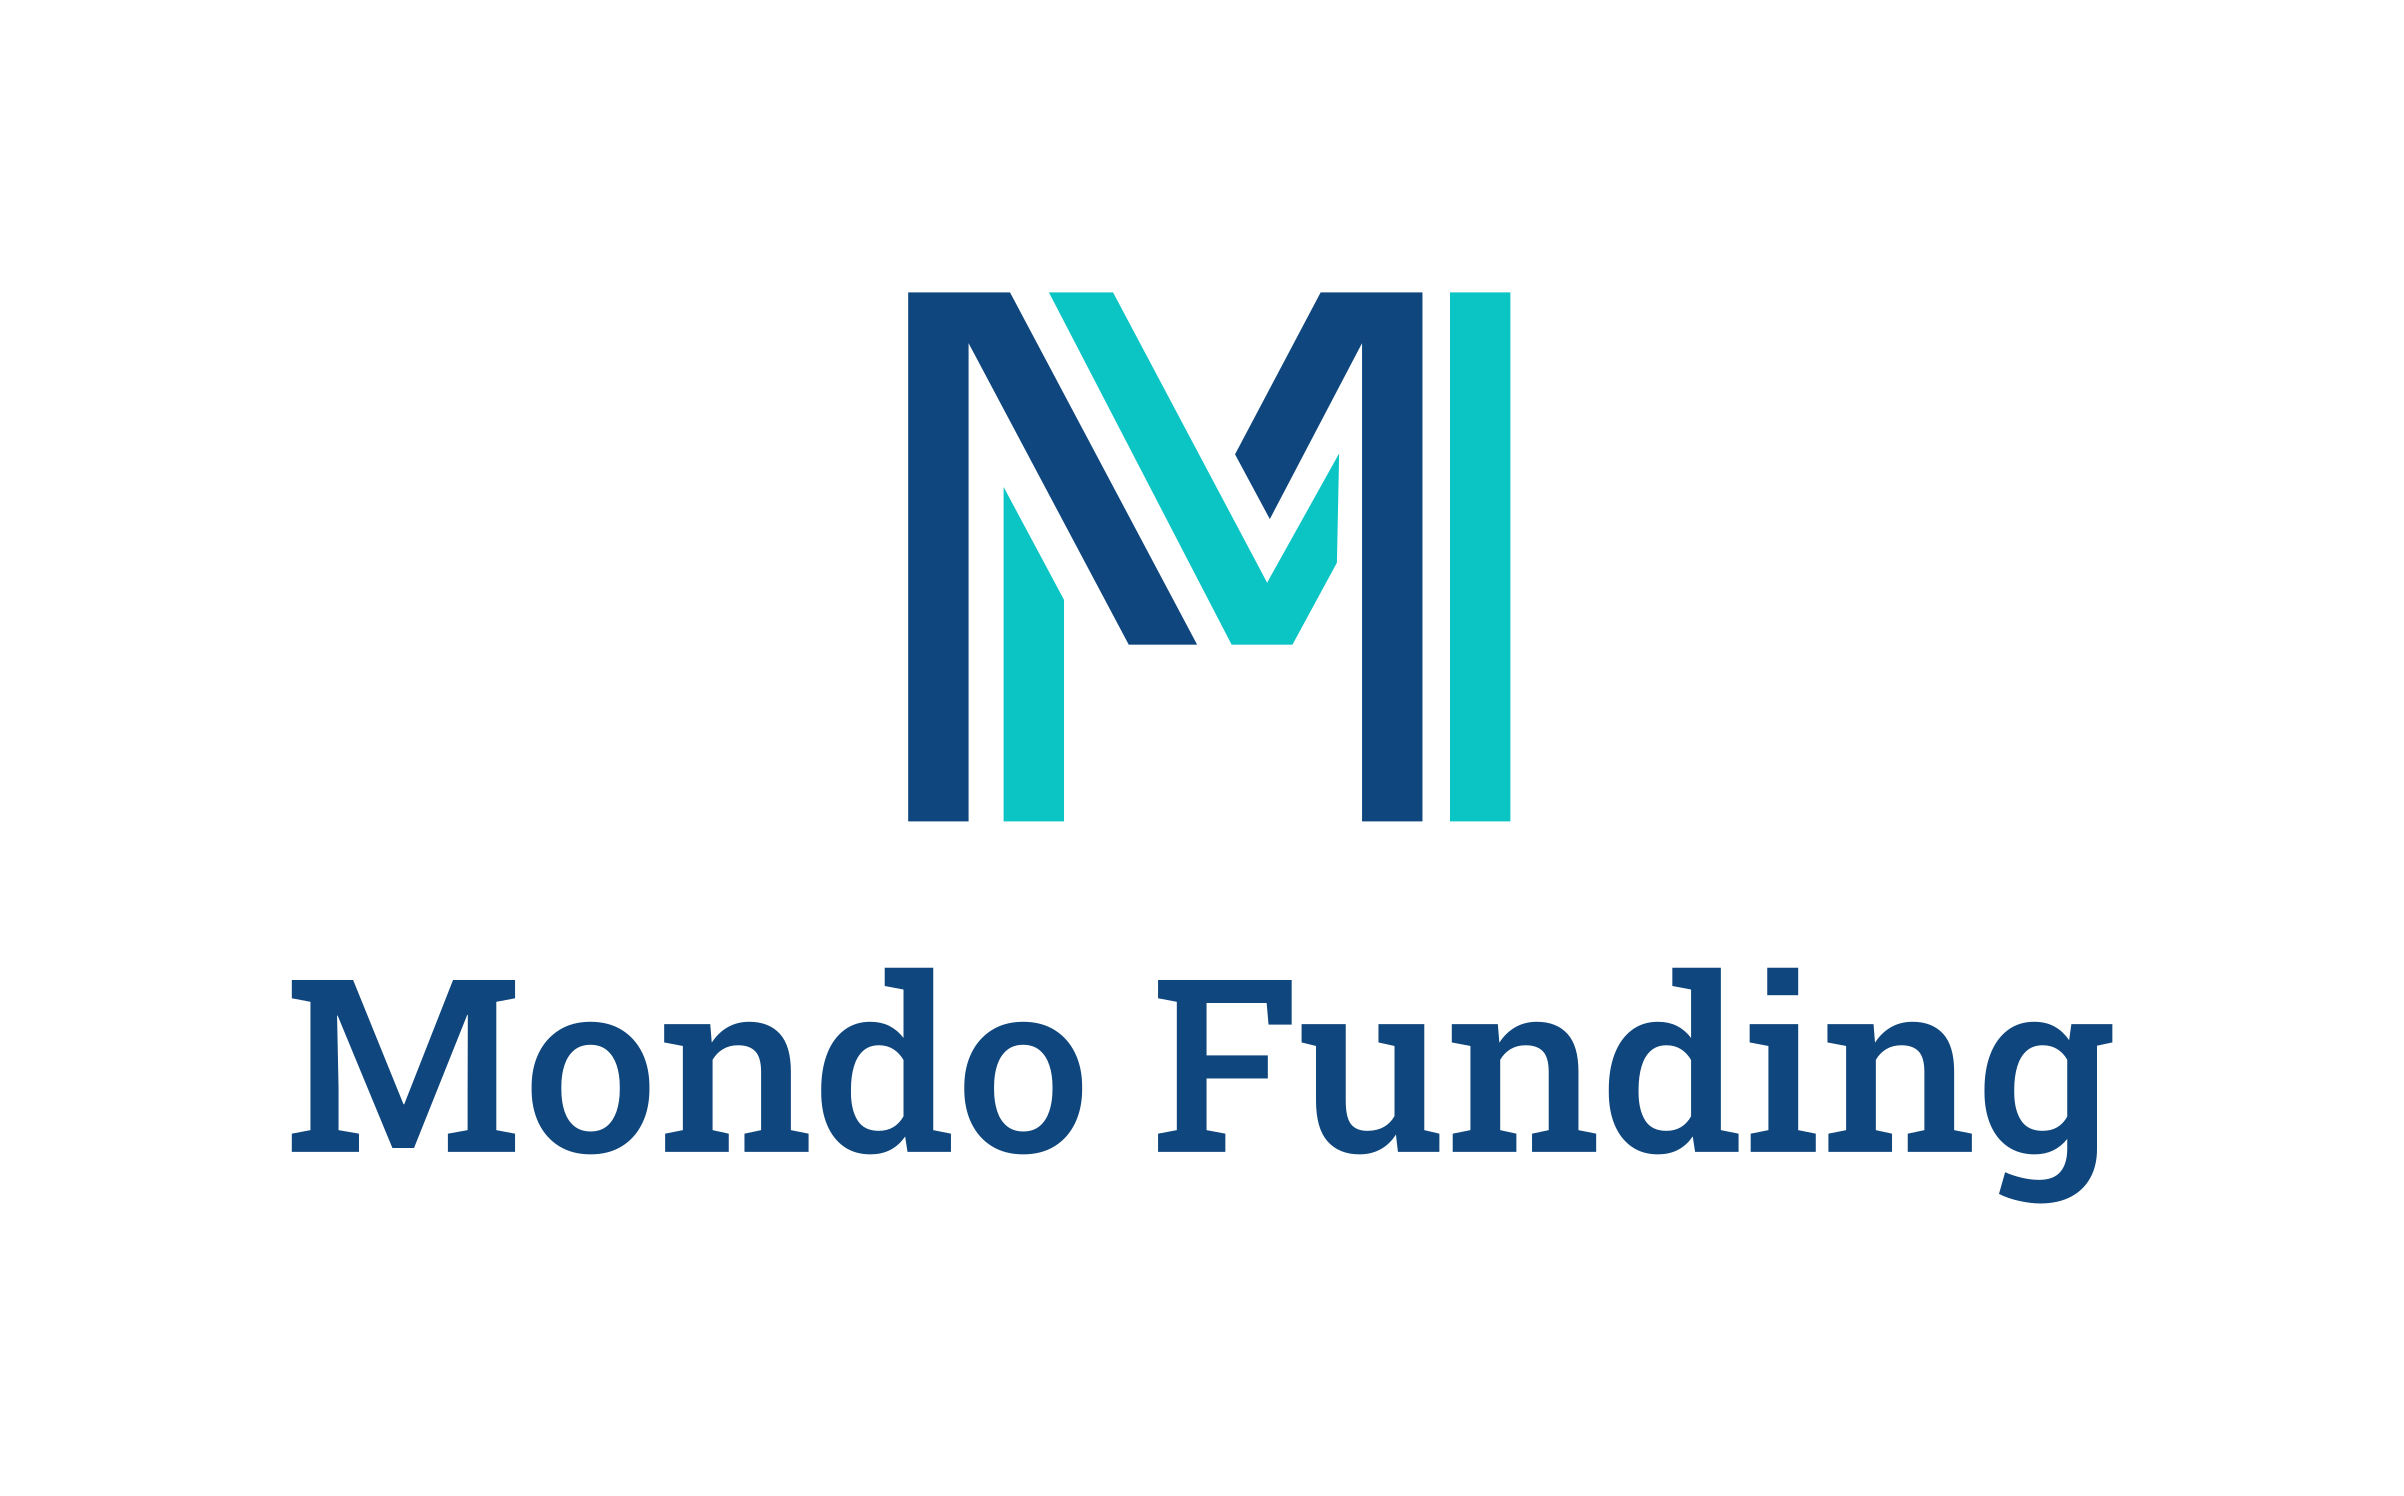 Mondetta - Crunchbase Company Profile & Funding